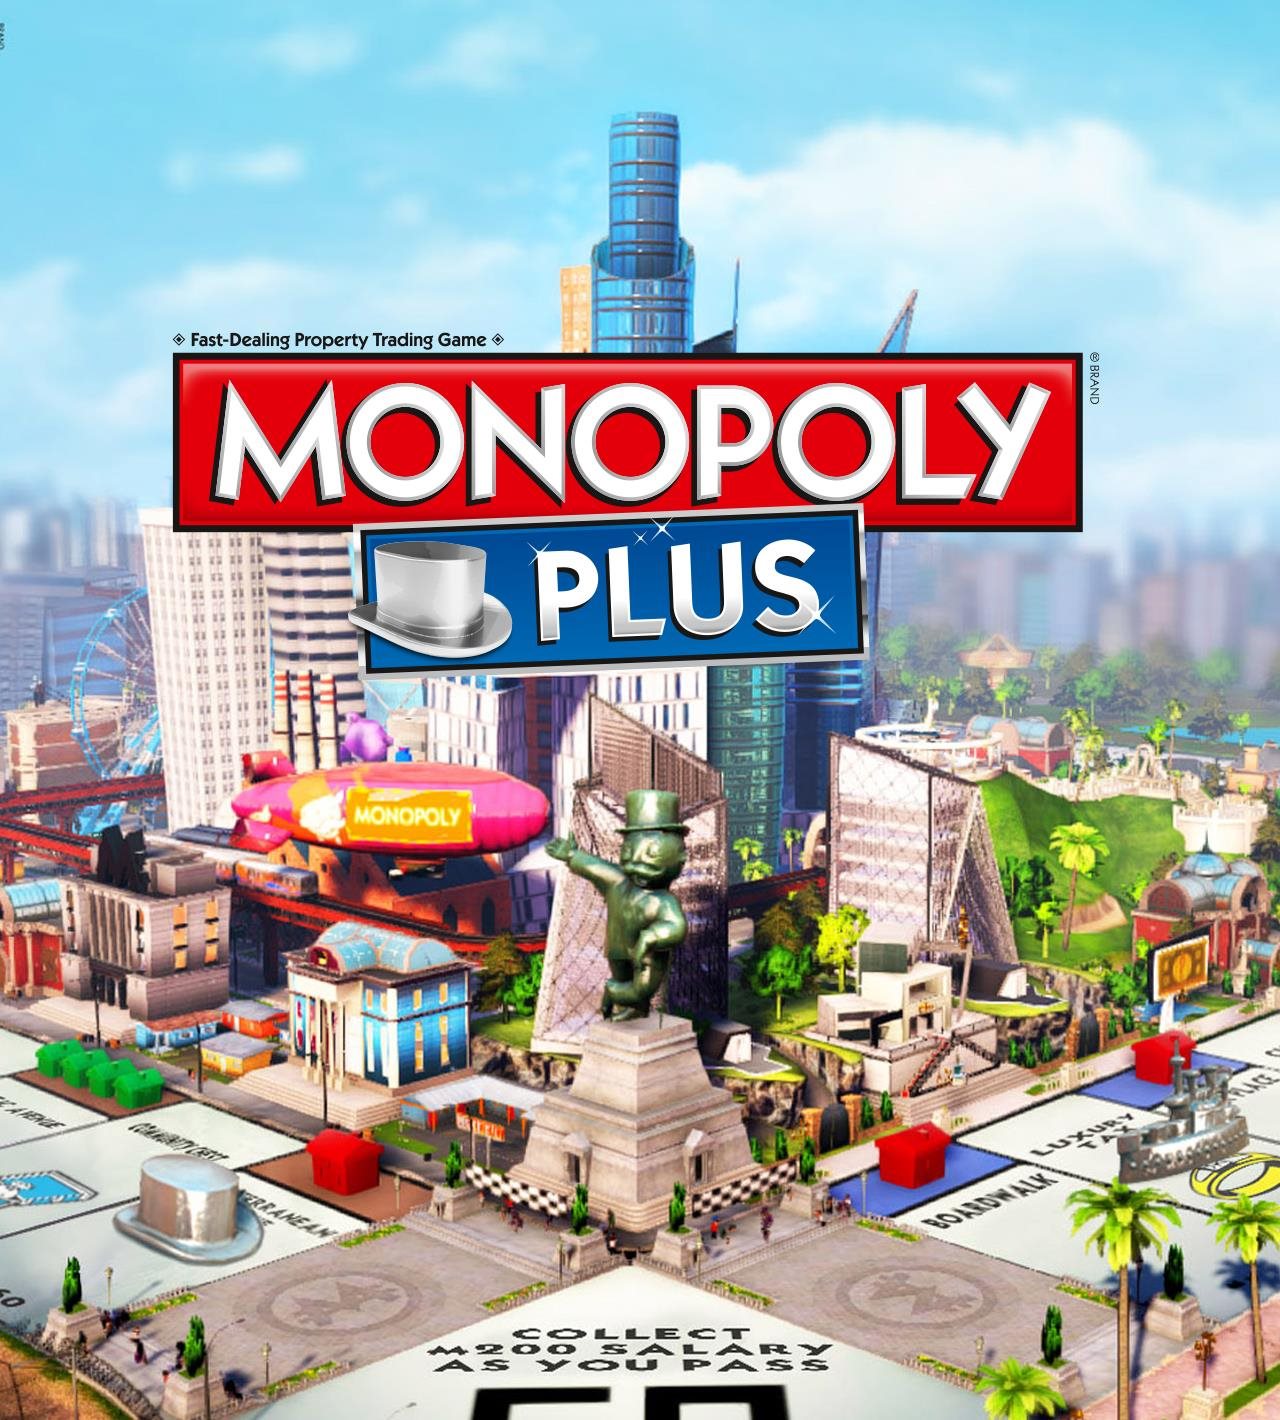 PC játék Monopoly Plus - PC DIGITAL